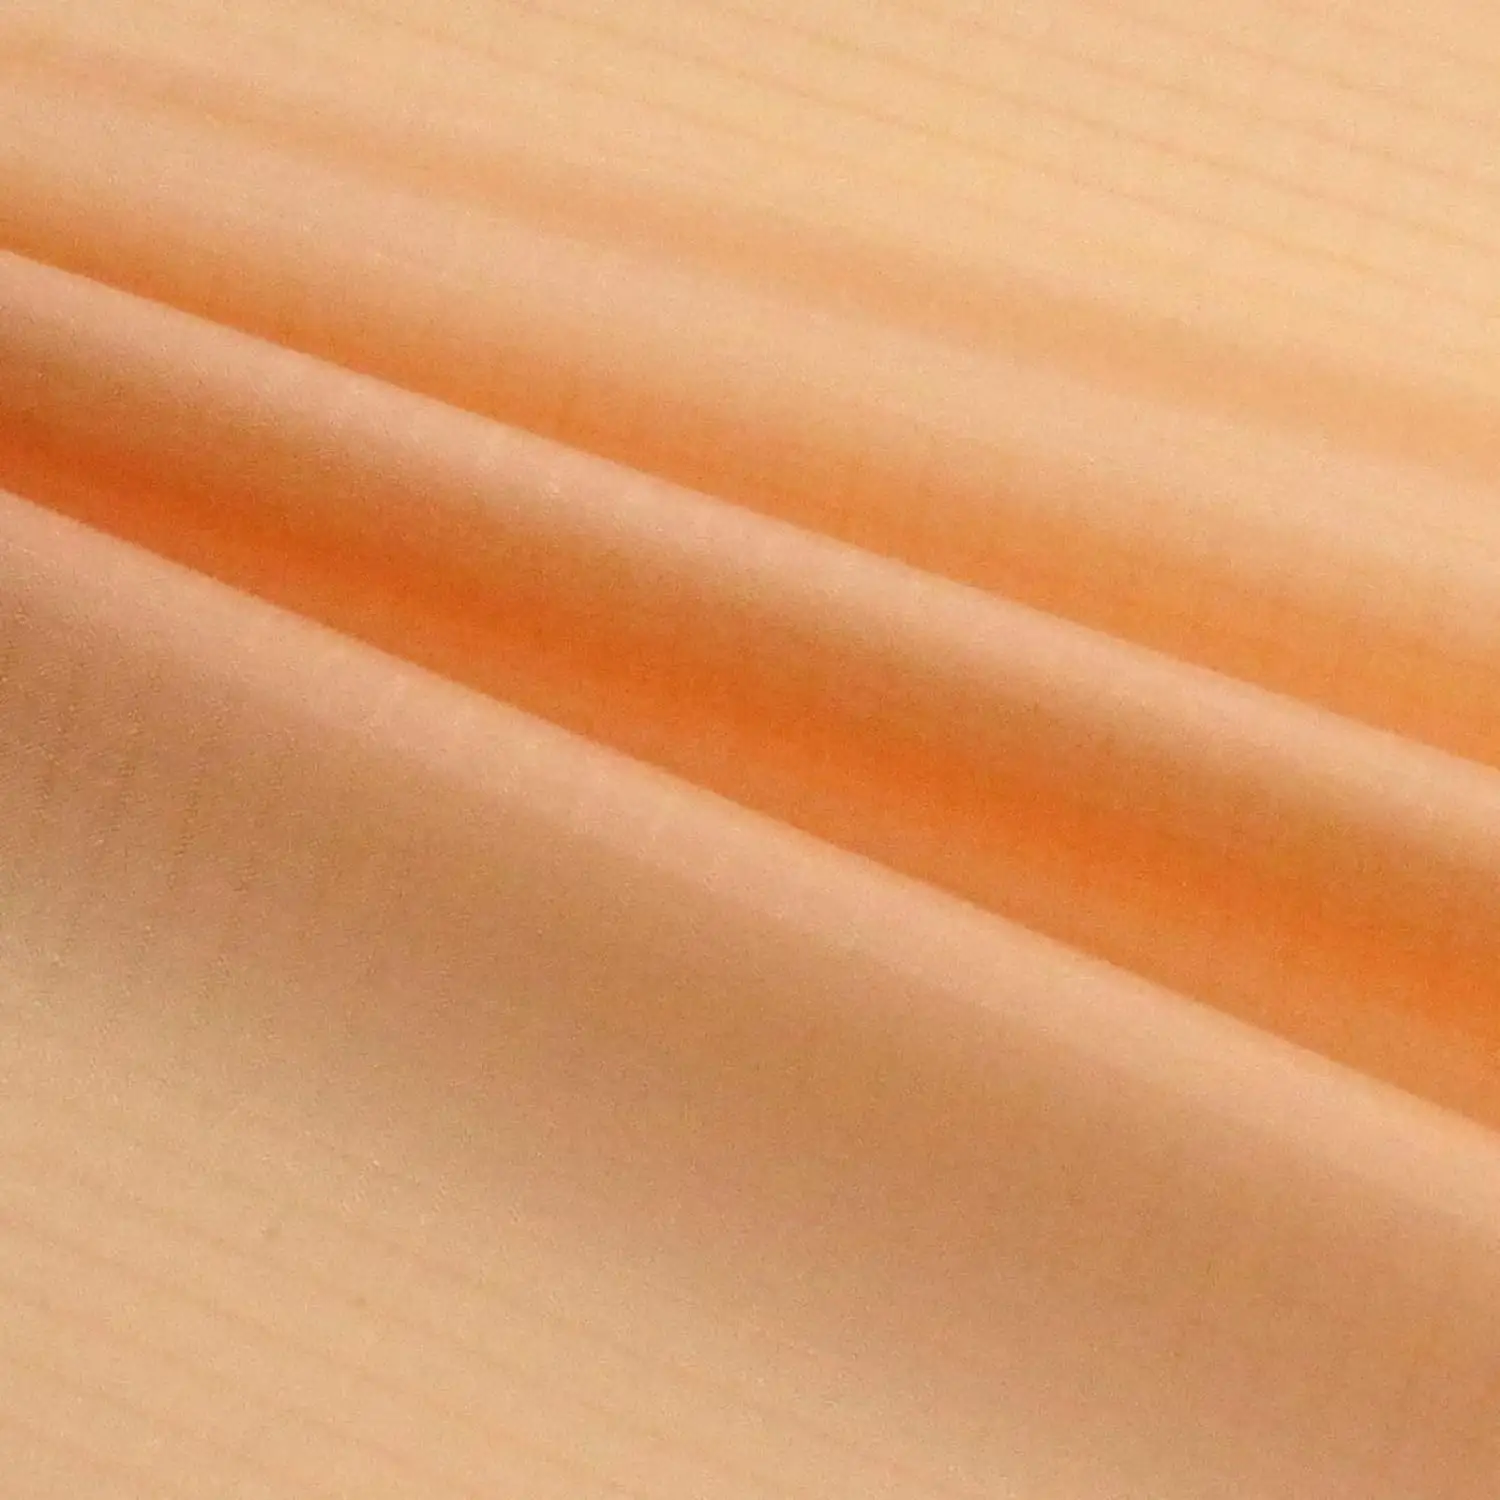 Tessuto impermeabile Ripstop in Nylon 40D, leggero, rivestimento in PU, tessuto di rivestimento